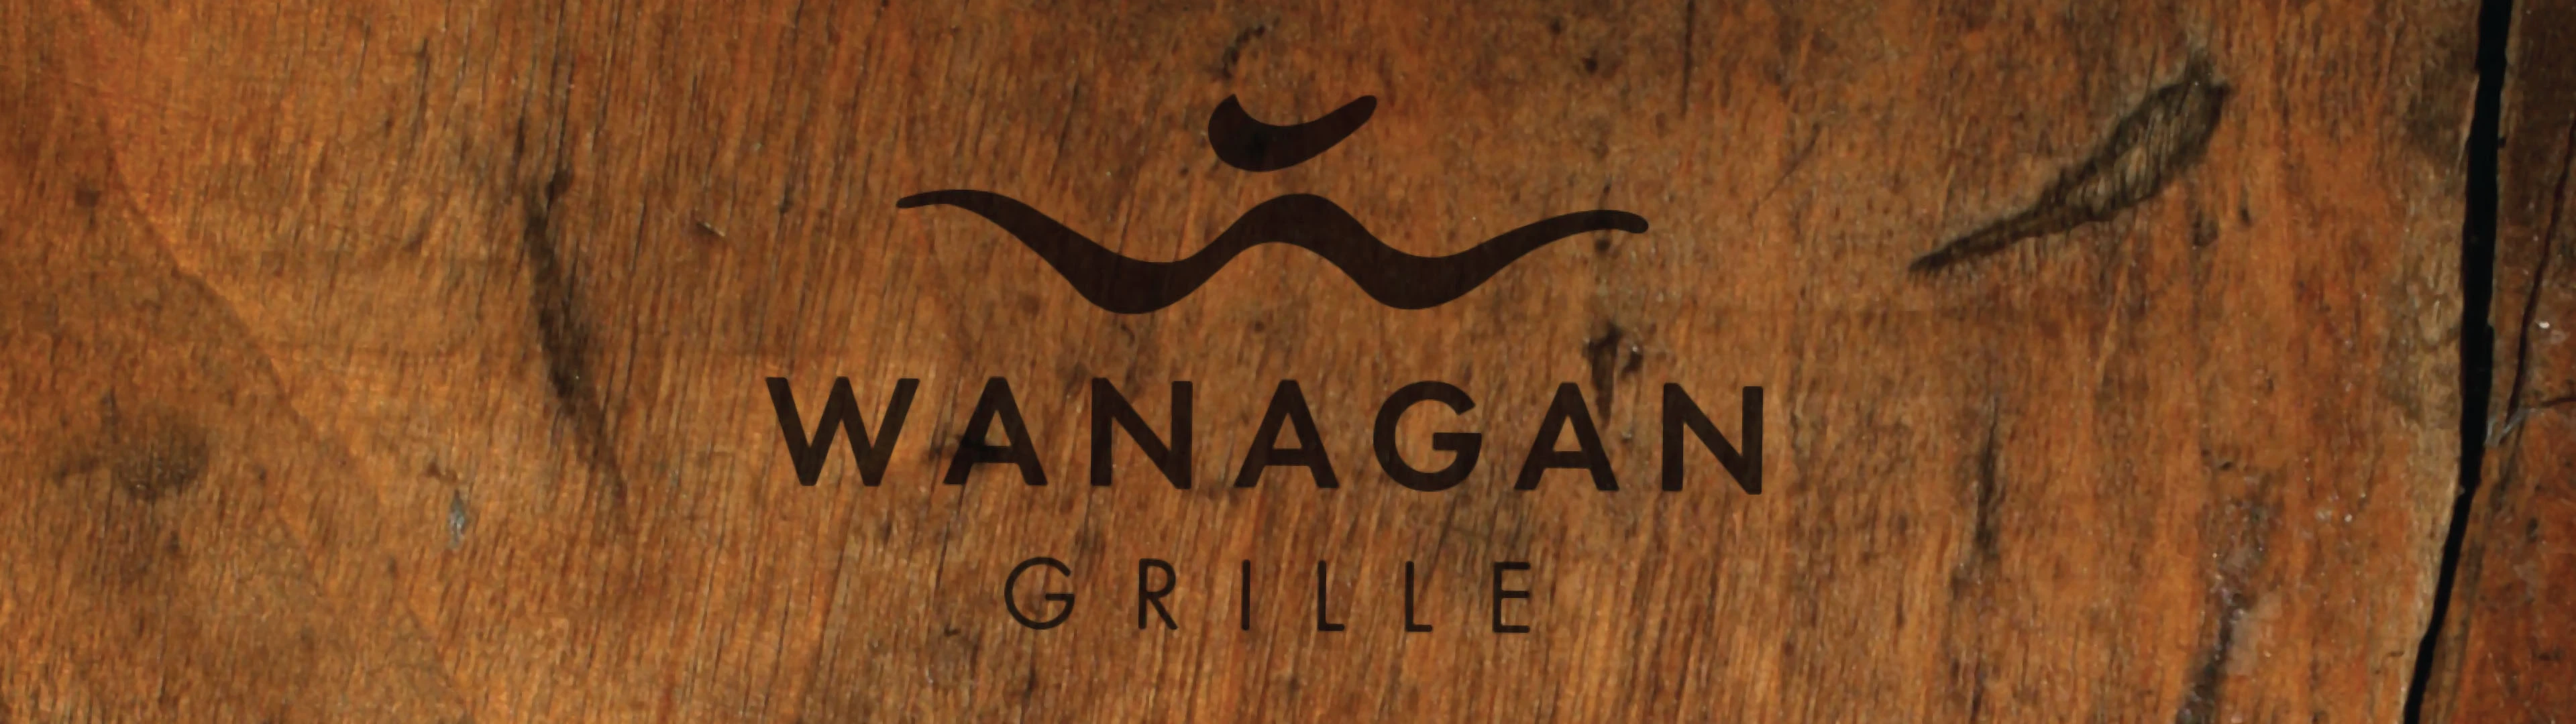 Wanagan Grille Wood Logo Header